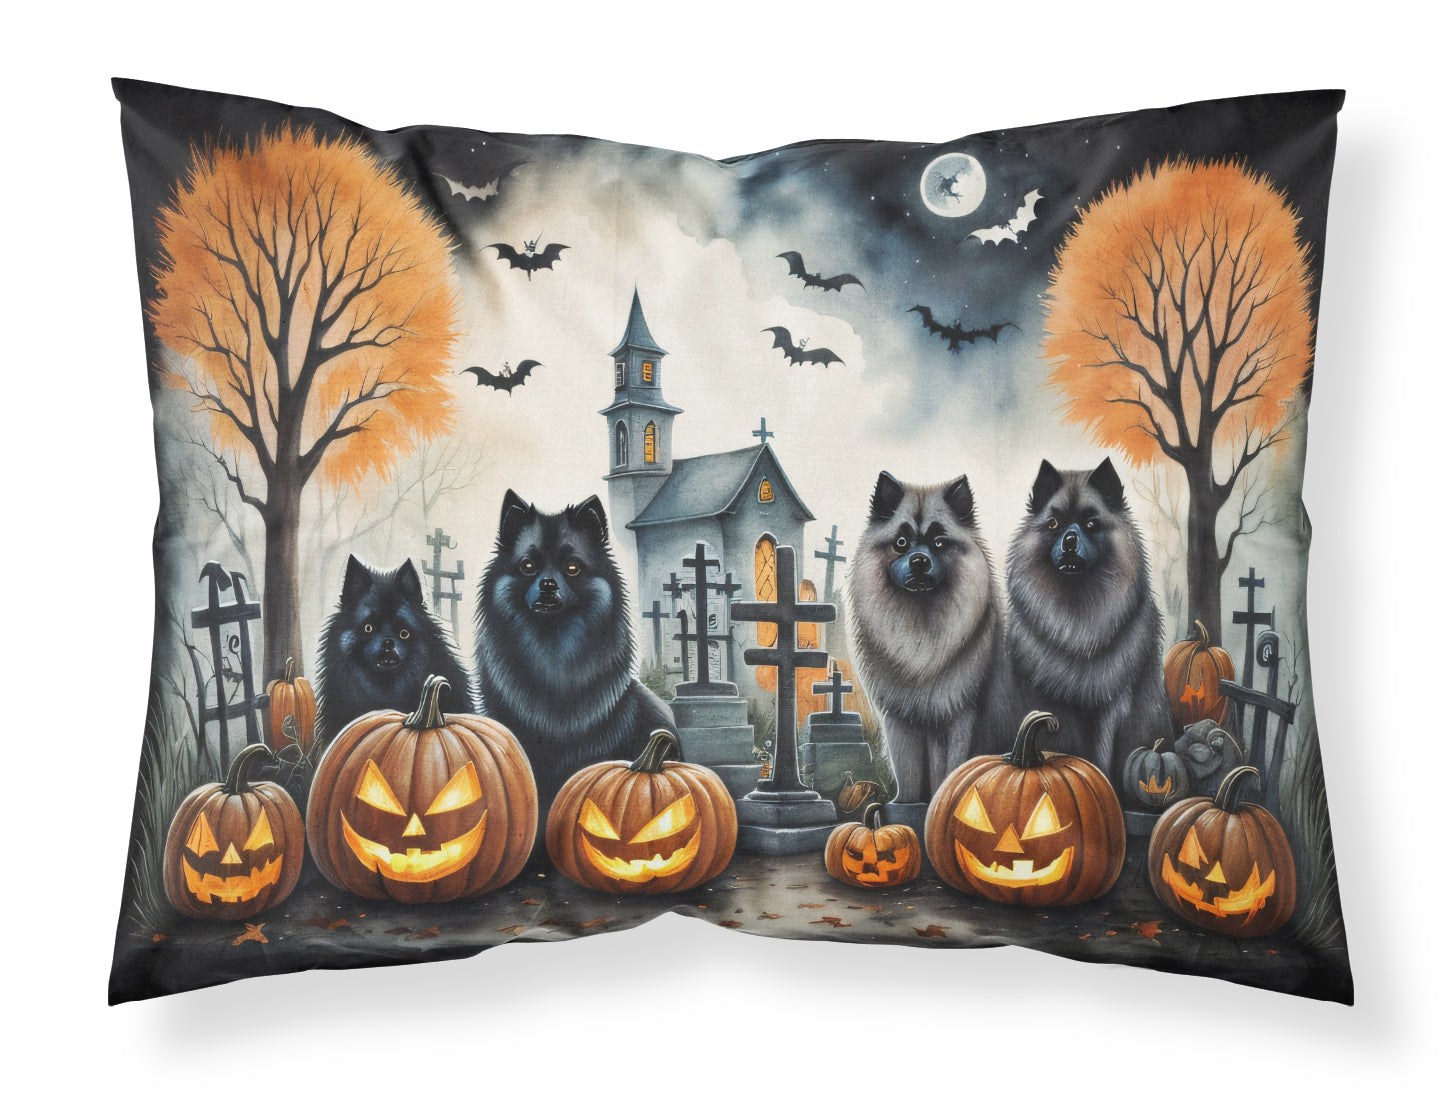 Buy this Keeshond Spooky Halloween Fabric Standard Pillowcase